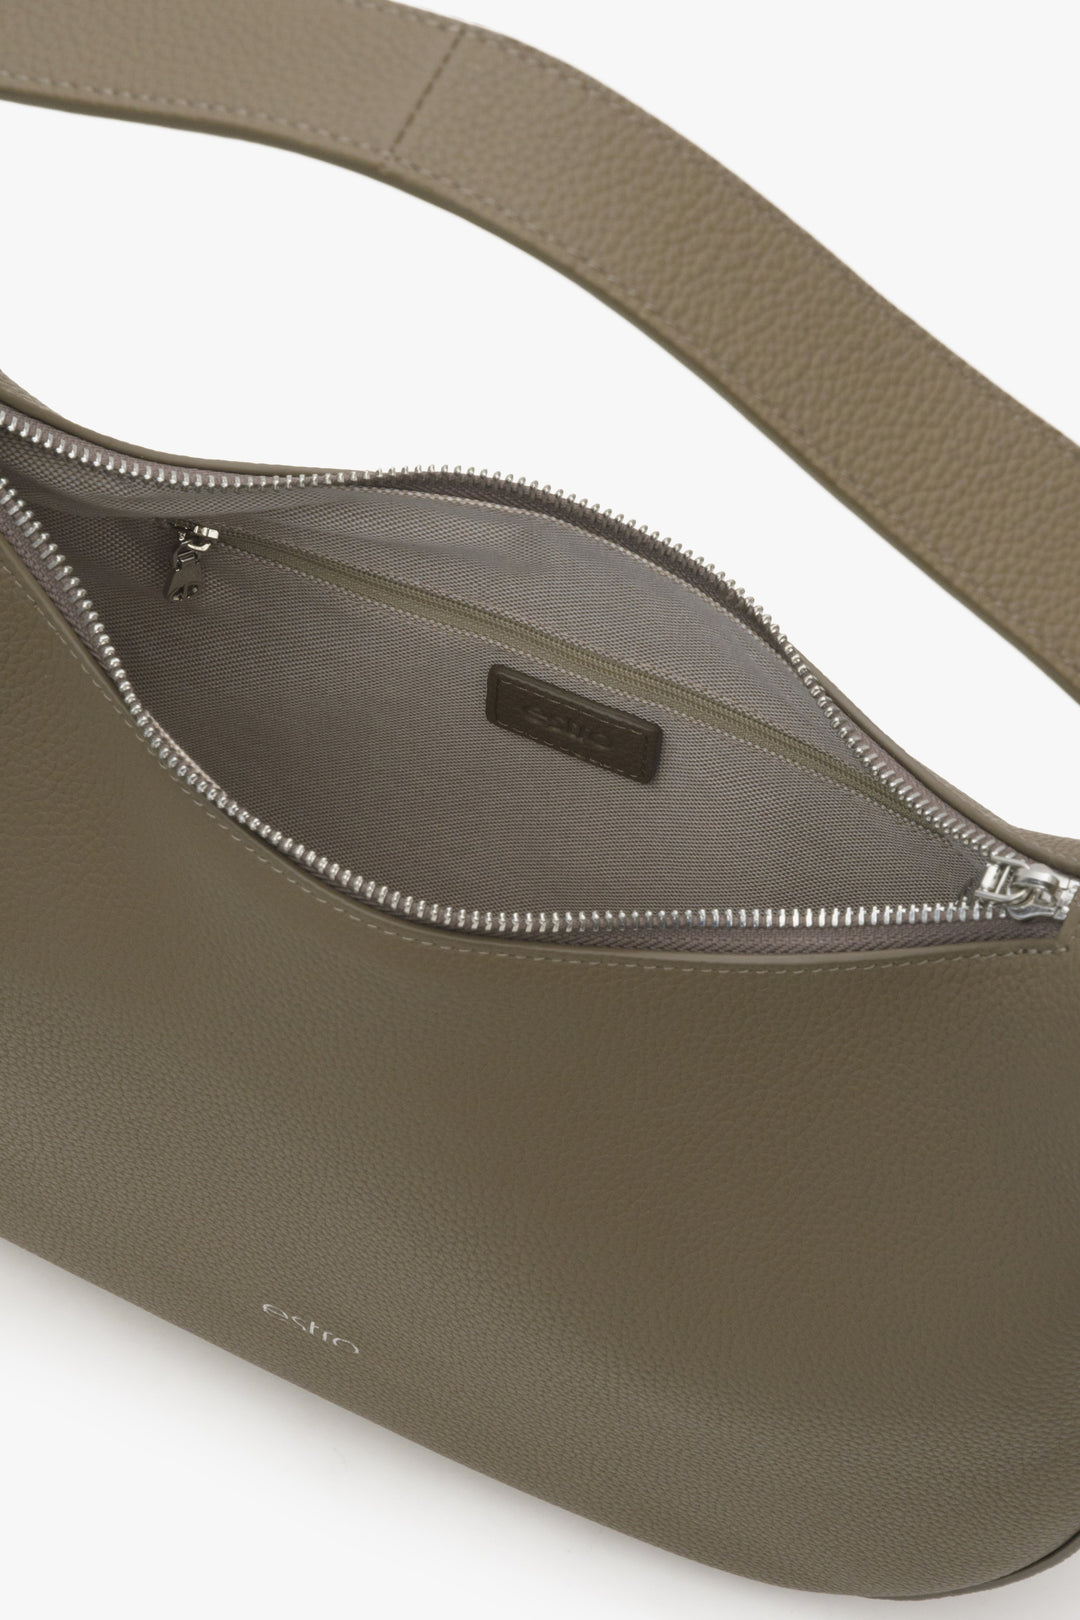 Women's brownish-gray crescent-shaped Estro handbag - close-up on the details.